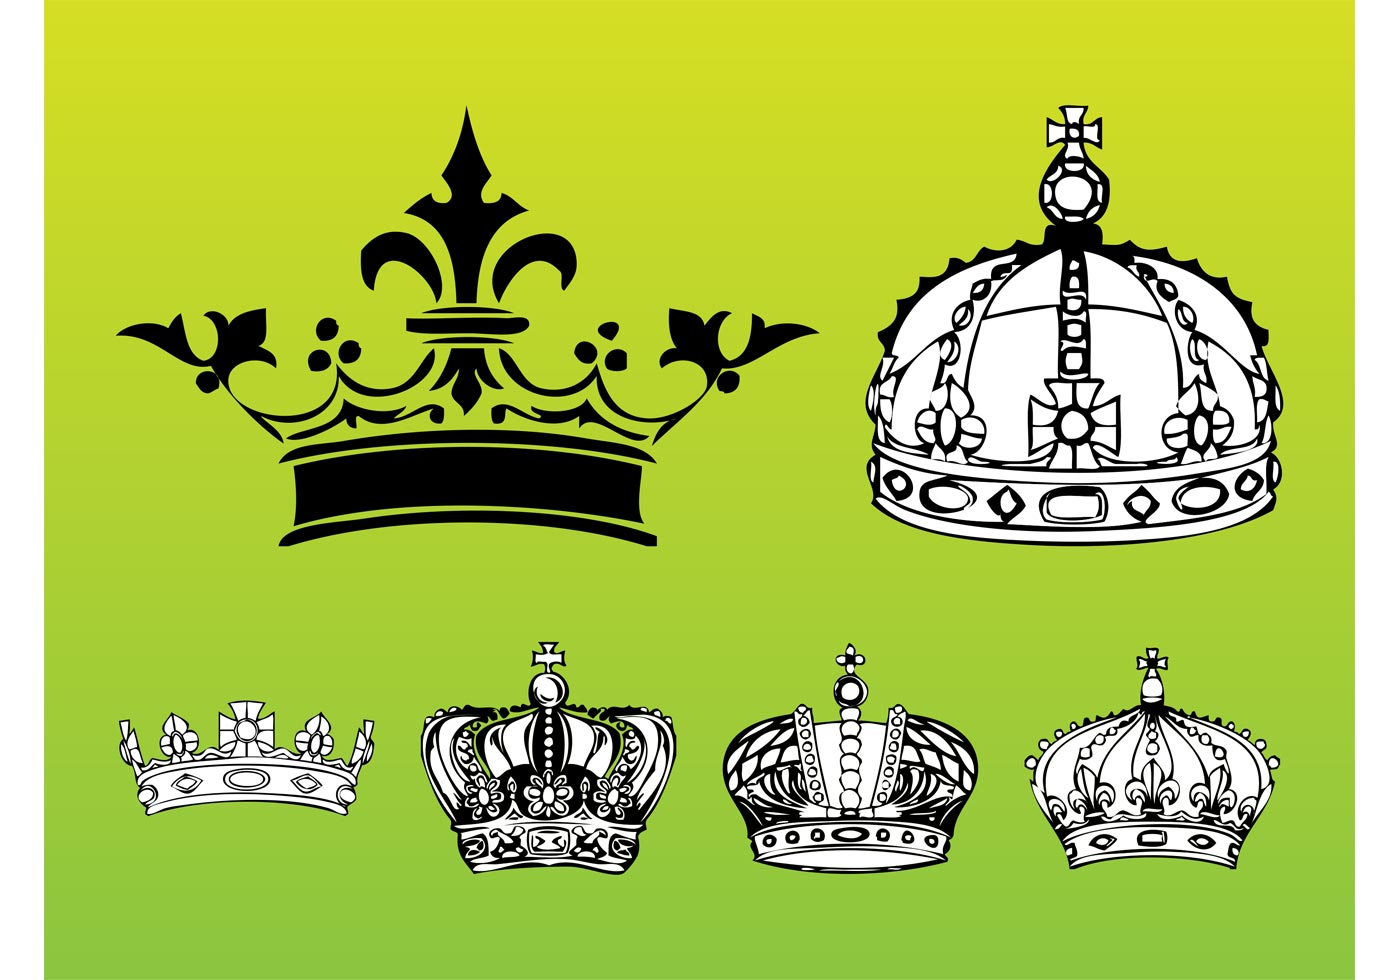 Download Royal Crown Logo Free Vector Art - (7024 Free Downloads)